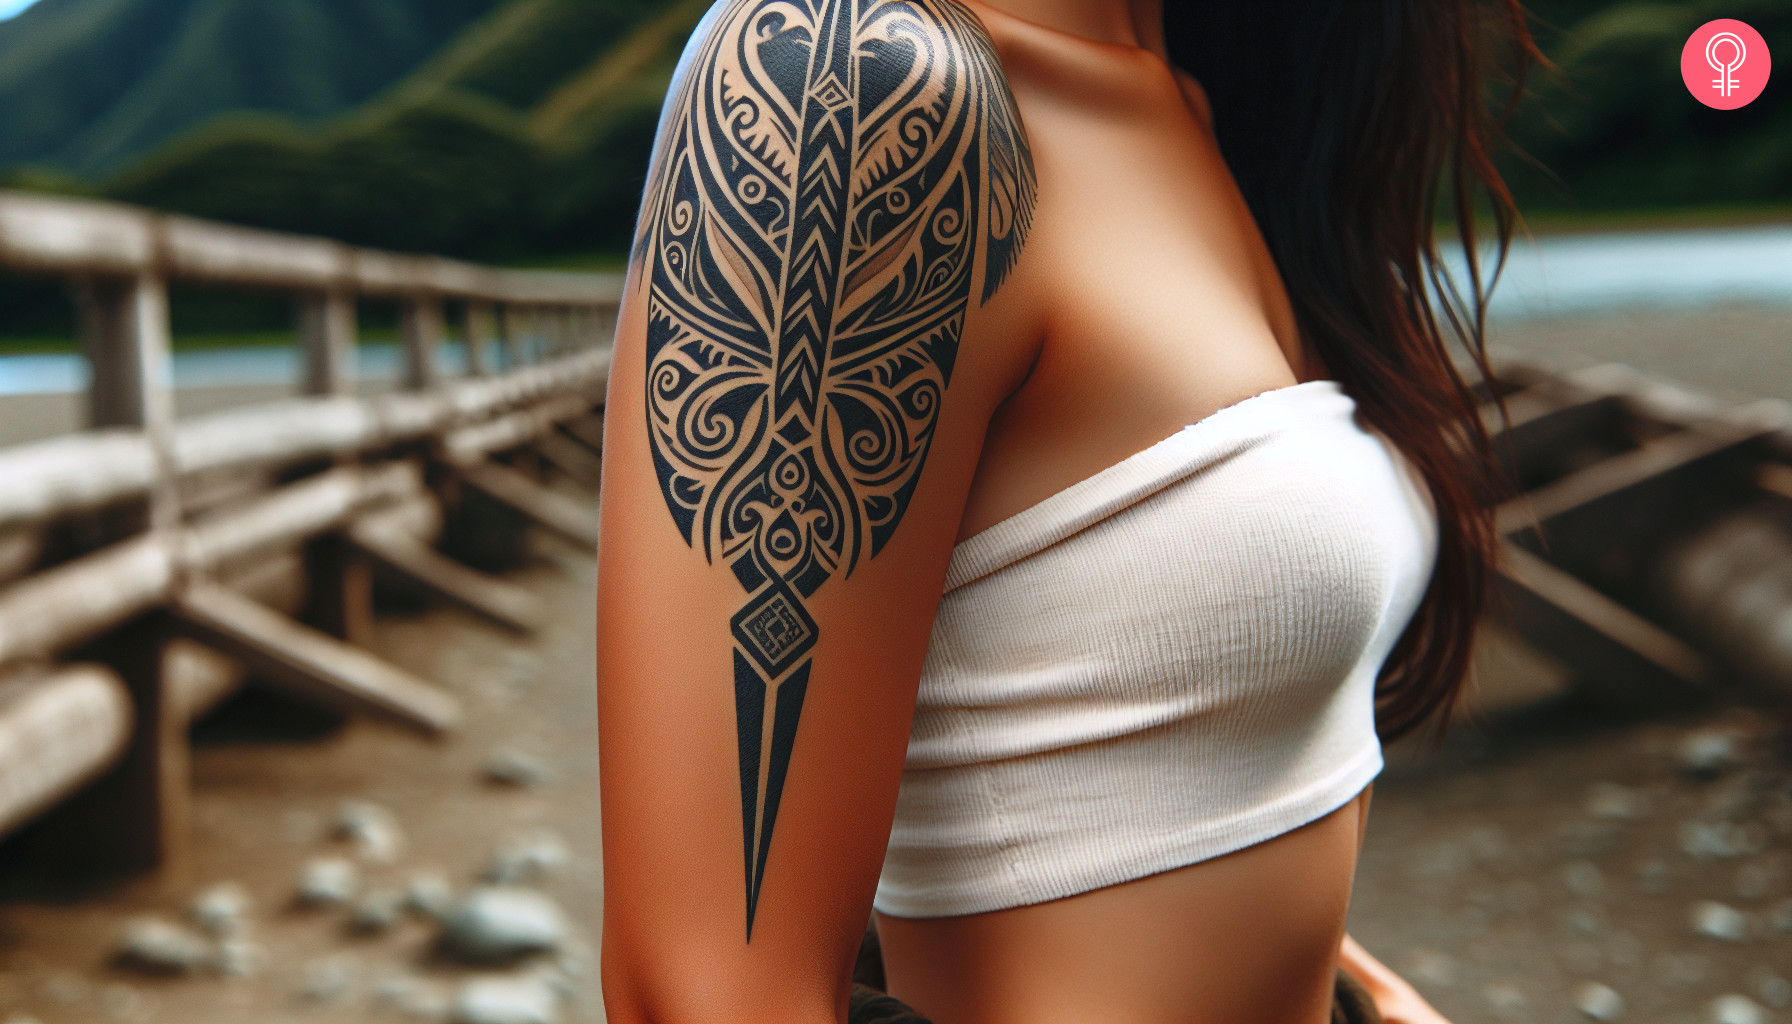 Spear head maori tattoos on upper arm of a woman